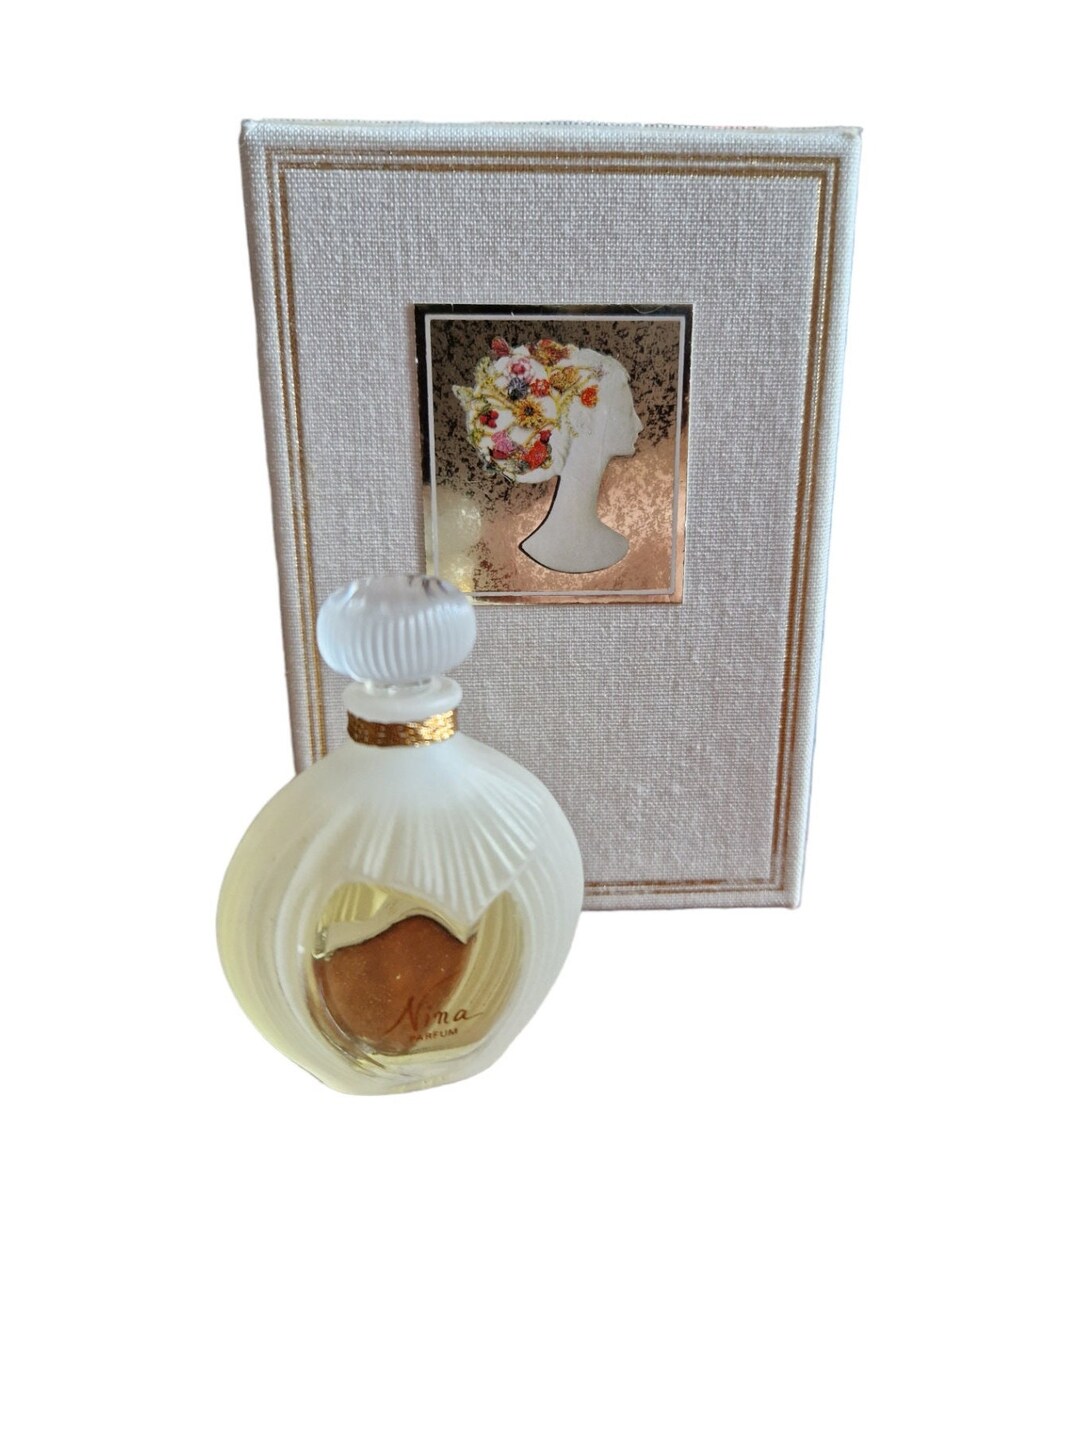 Nina De Nina Ricci Miniature Perfume 7.5 Ml in Its Collection - Etsy